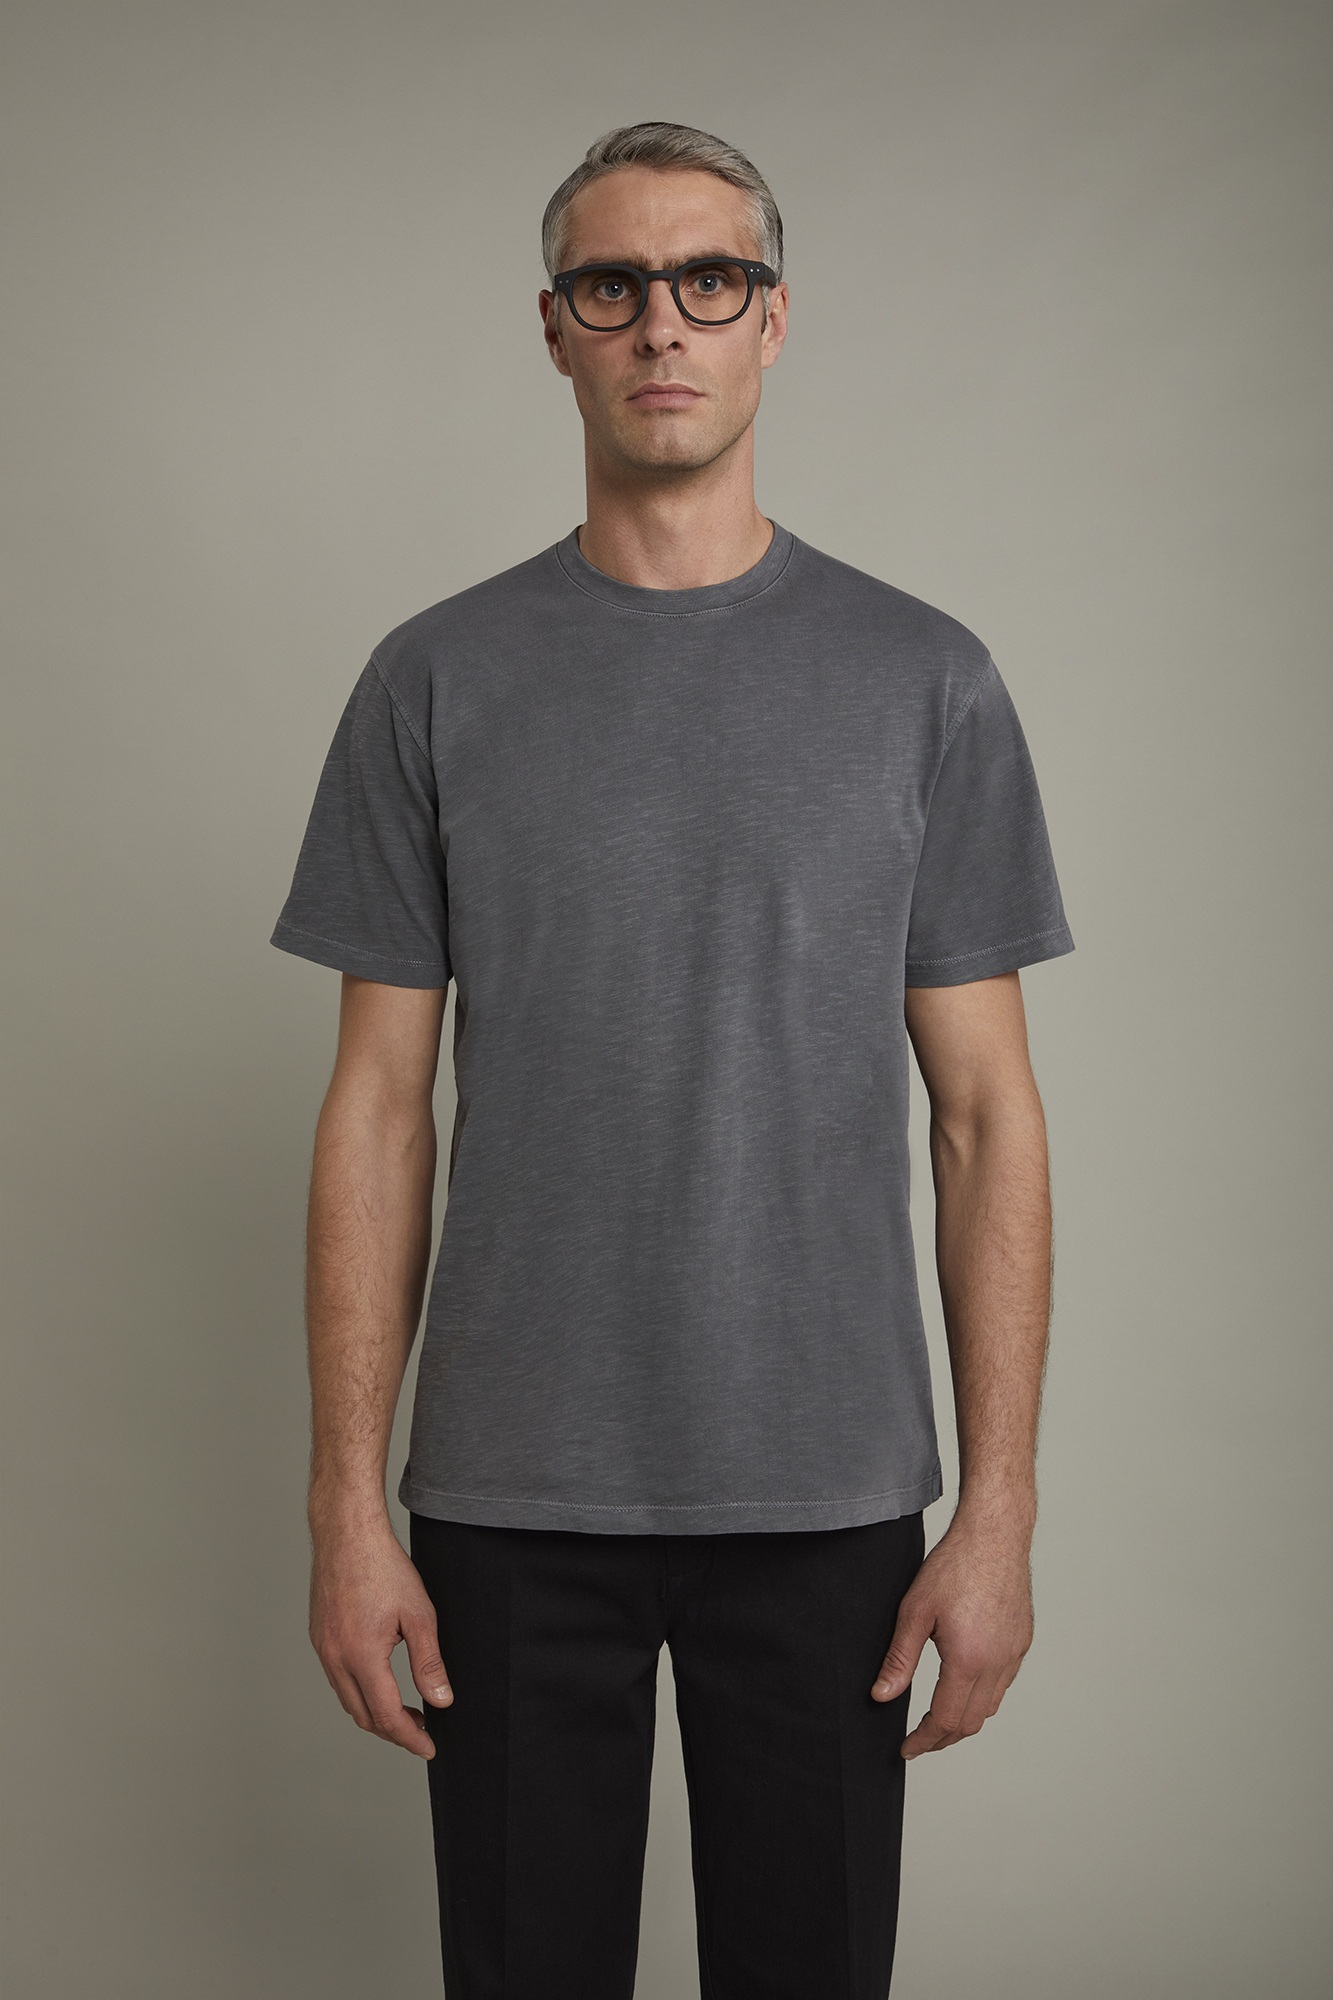 Men’s round neck t-shirt 100% cotton flamed effect regular fit image number null